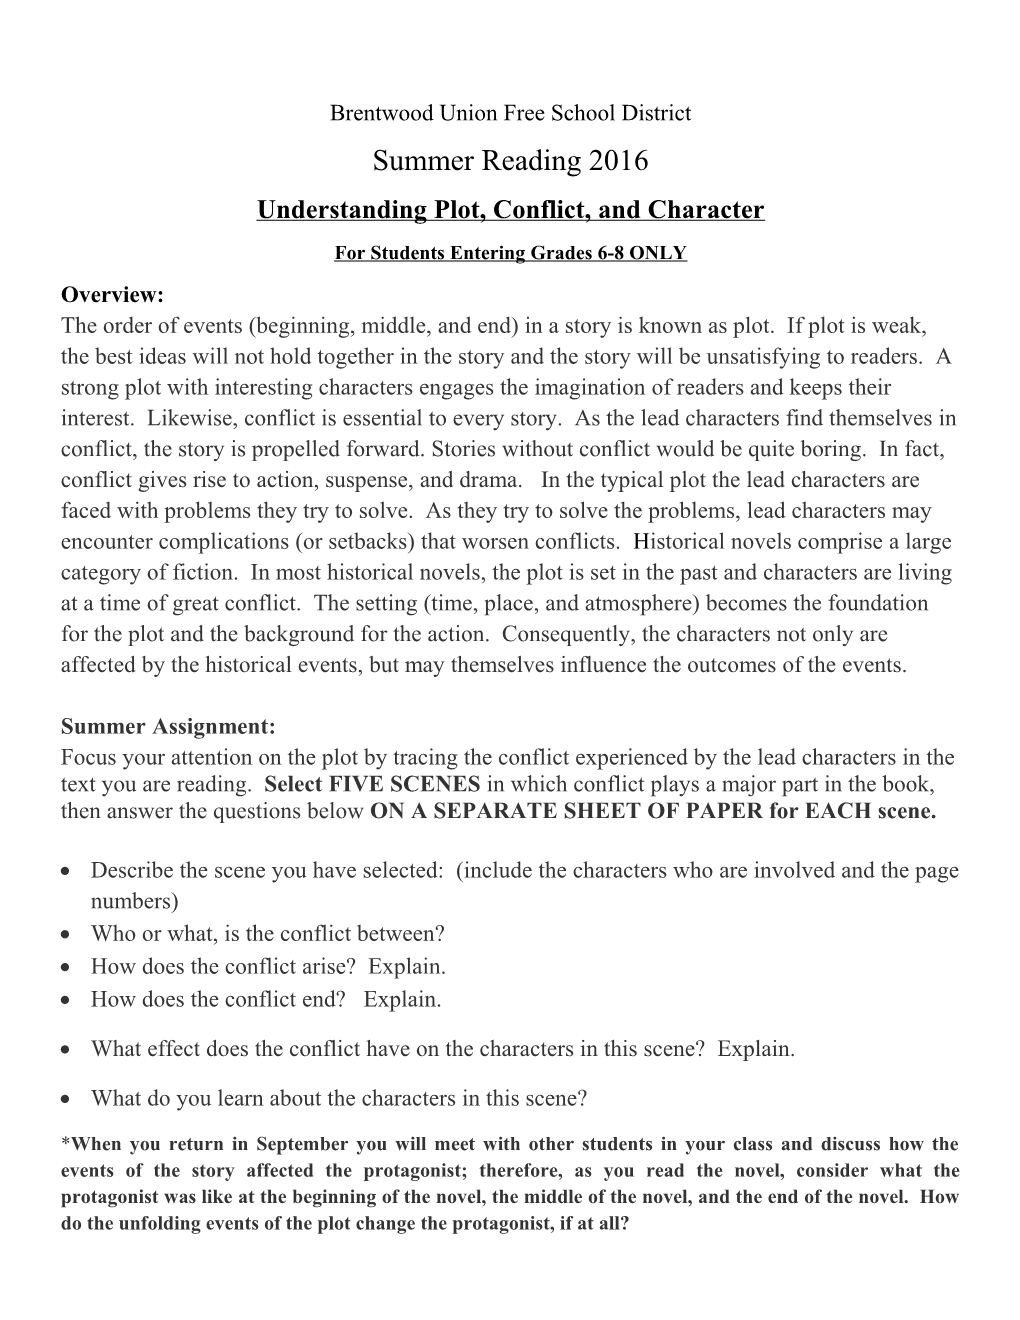 Understanding Plot, Conflict, and Character